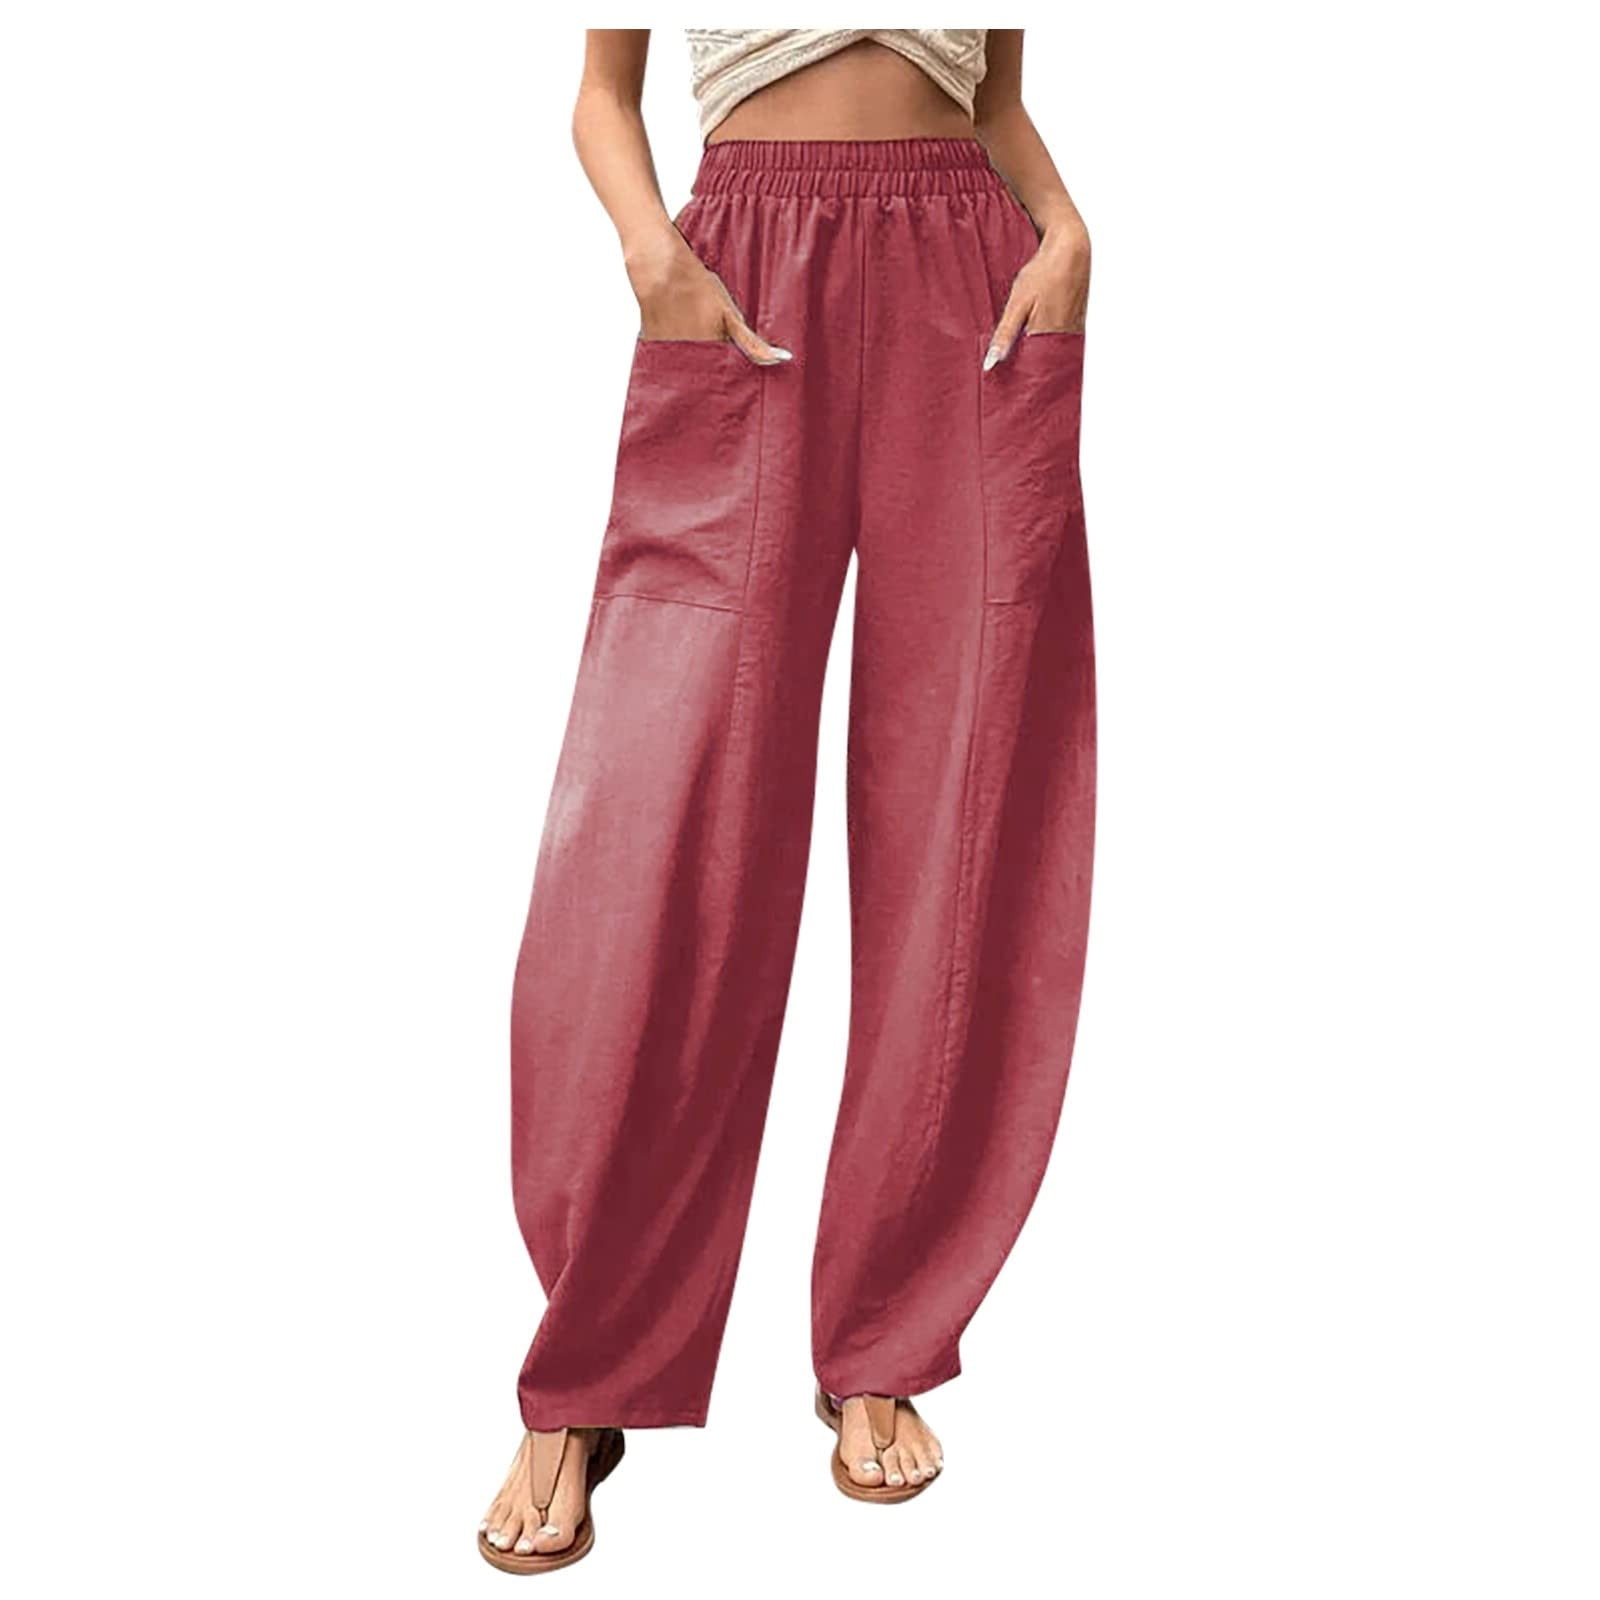 Summer Pants for Women Casual Cotton Linen Printed Elastic Waist Loose Fit  Pockets Trousers Ladies Lightweight Pants XLarge WhiteA3  Walmartcom